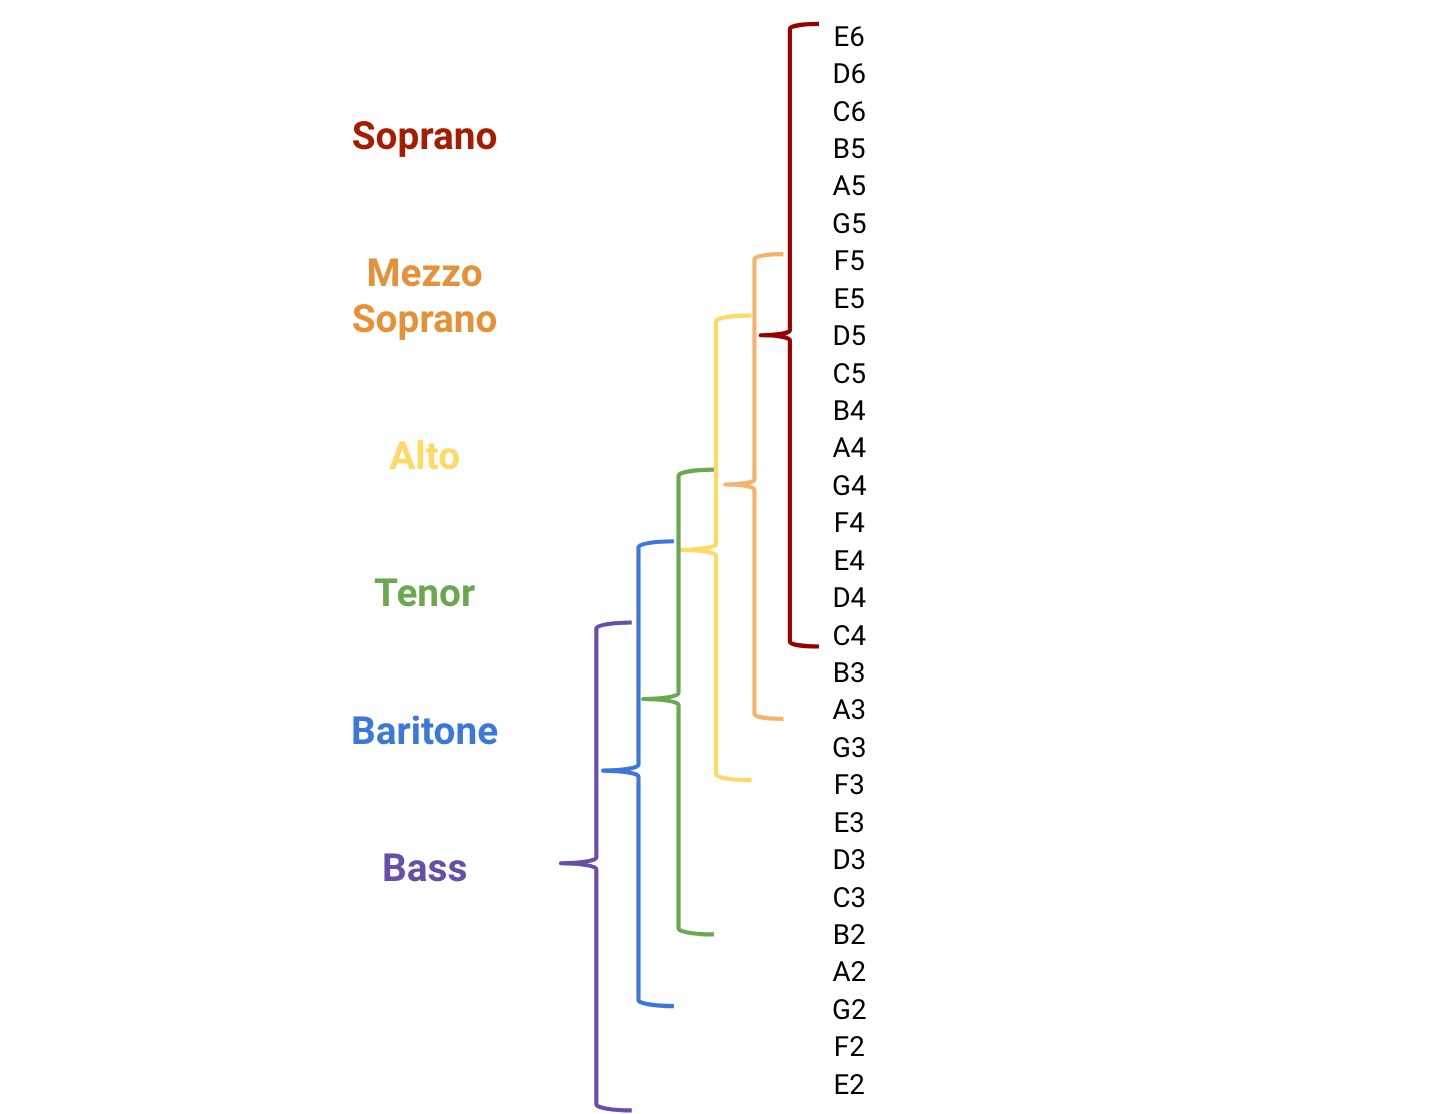 Female Vocal Range Chart